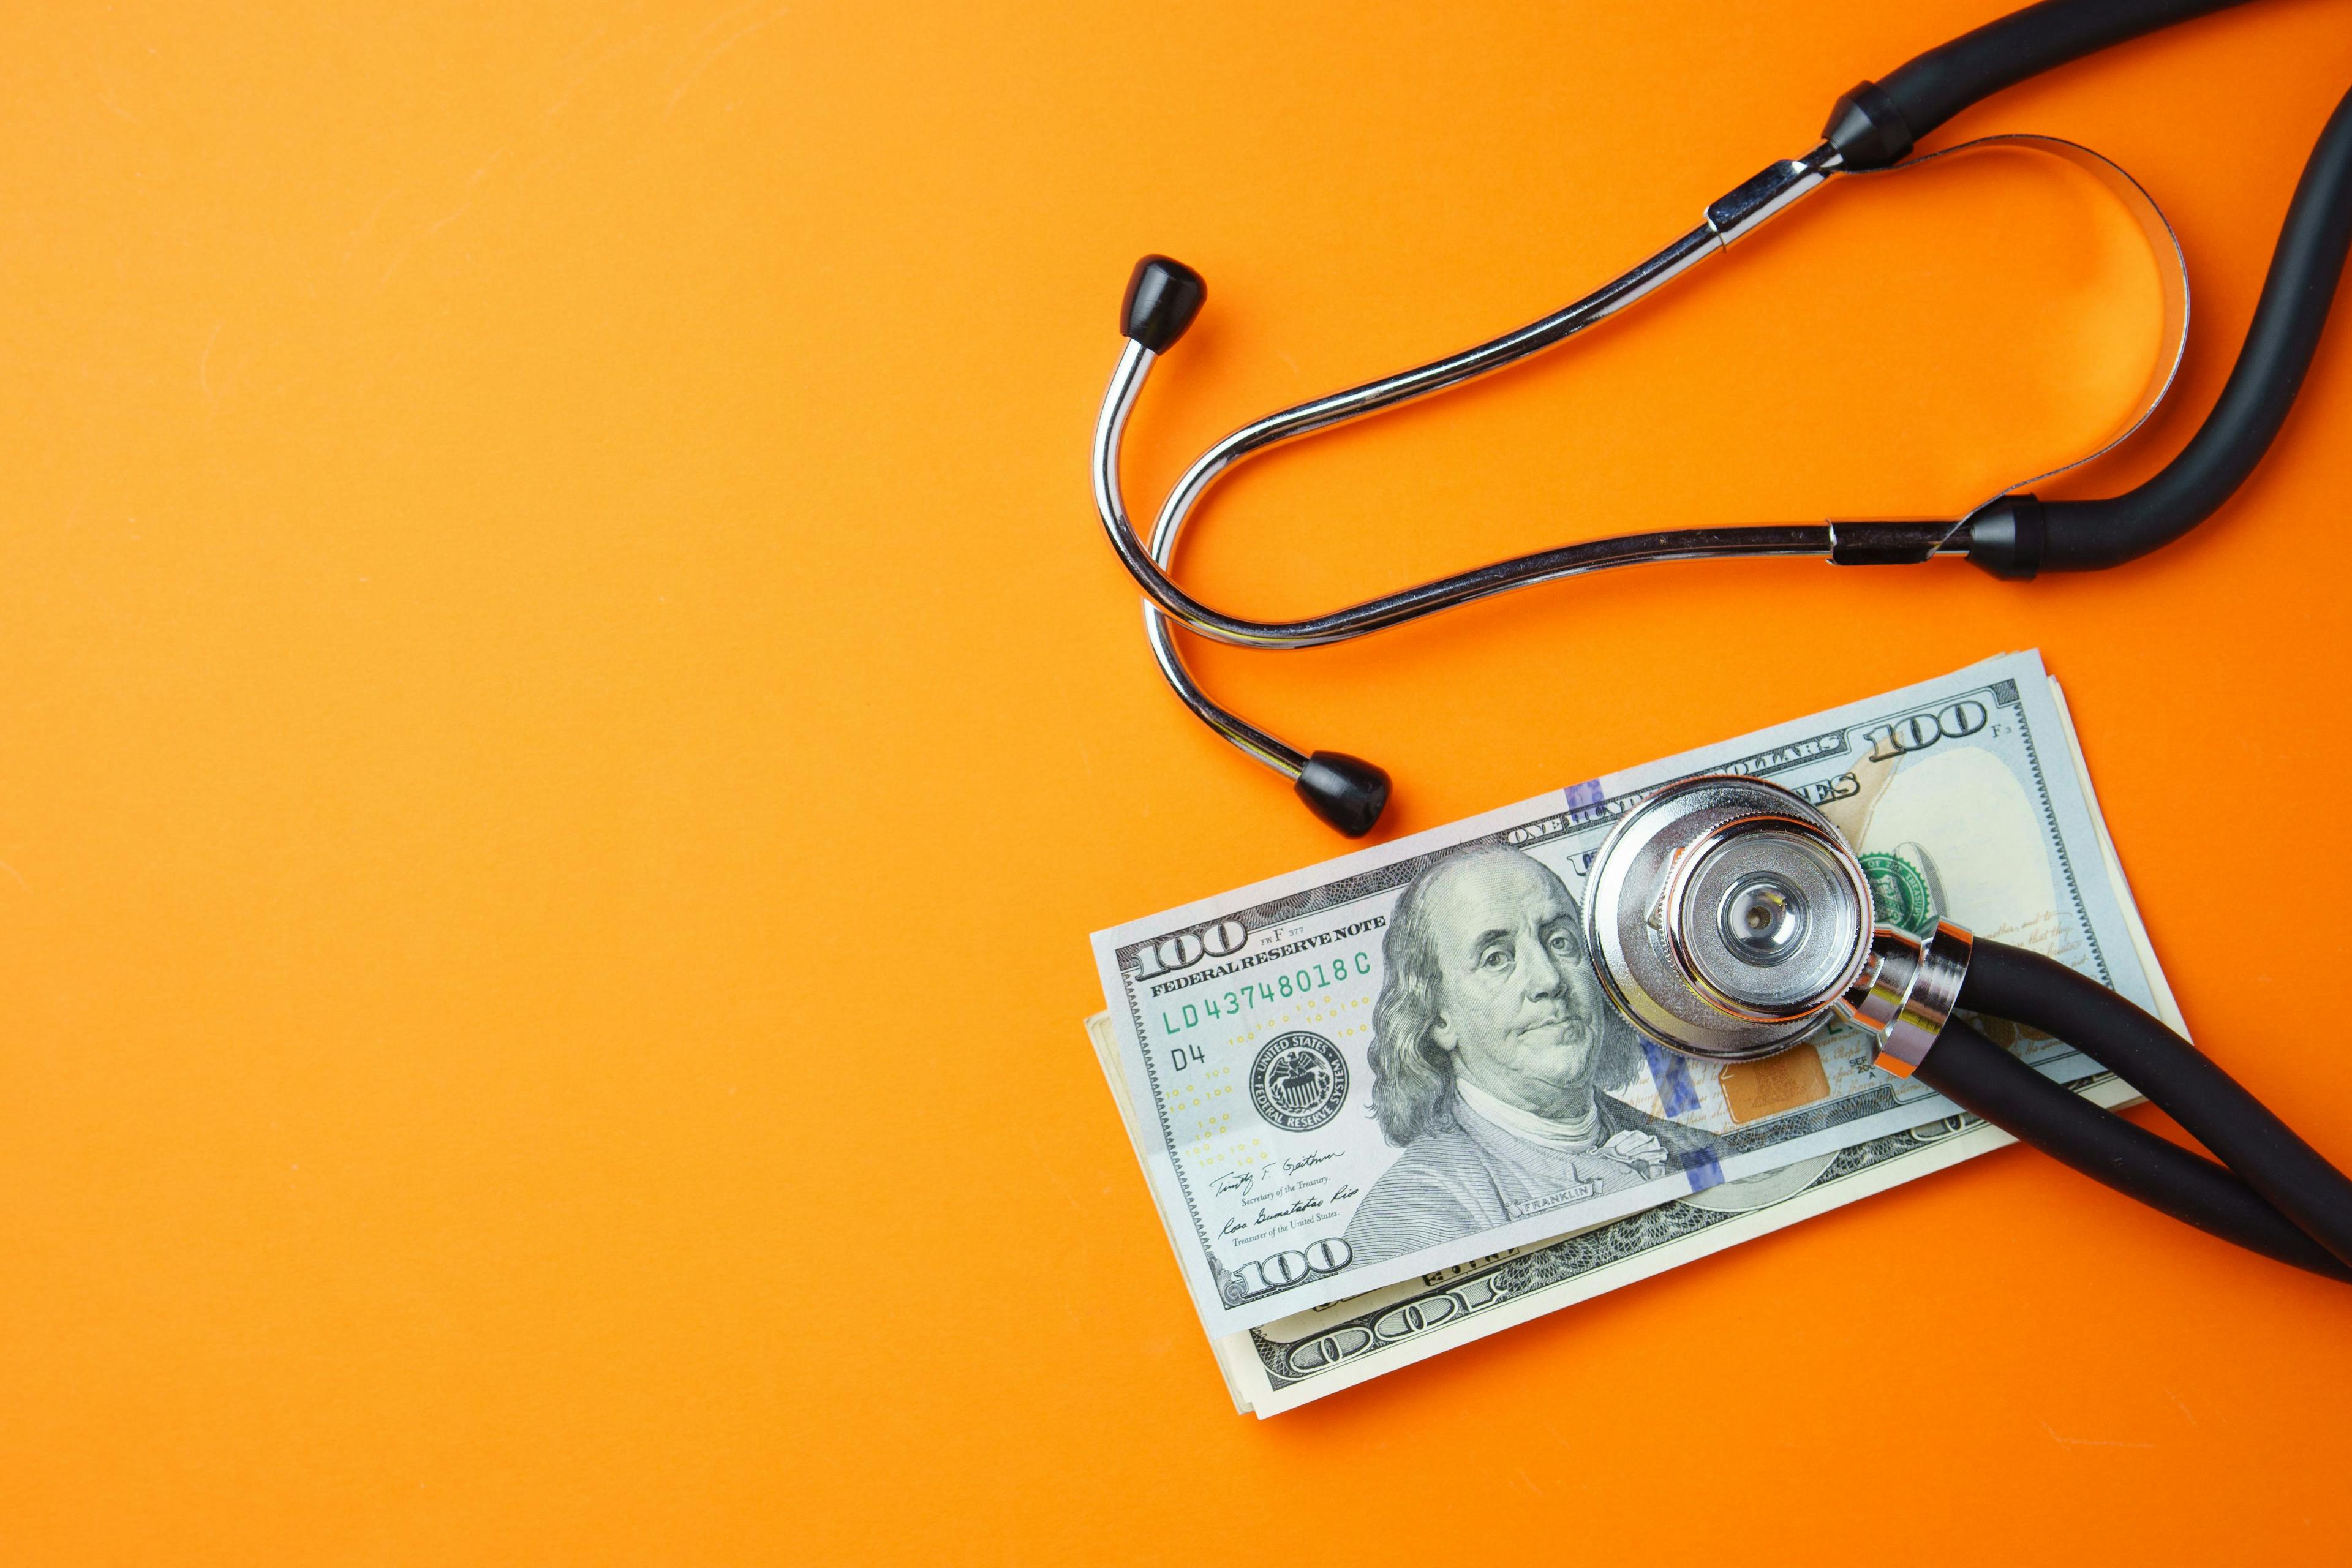 Medical stethoscope with money | Image credit: grek881 - stock.adobe.com